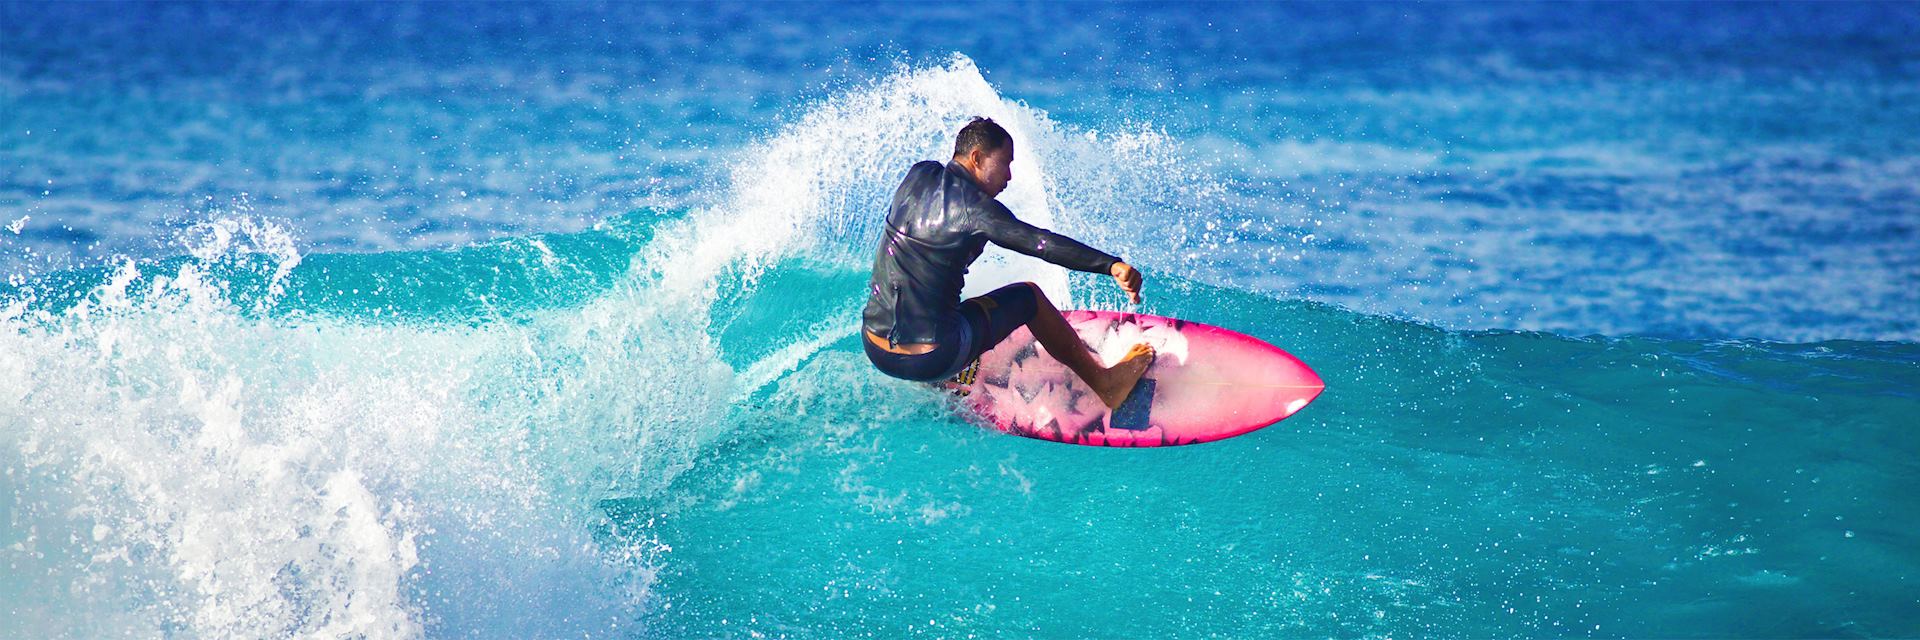 Surfer off the coast of Kauaʻi, Hawaii